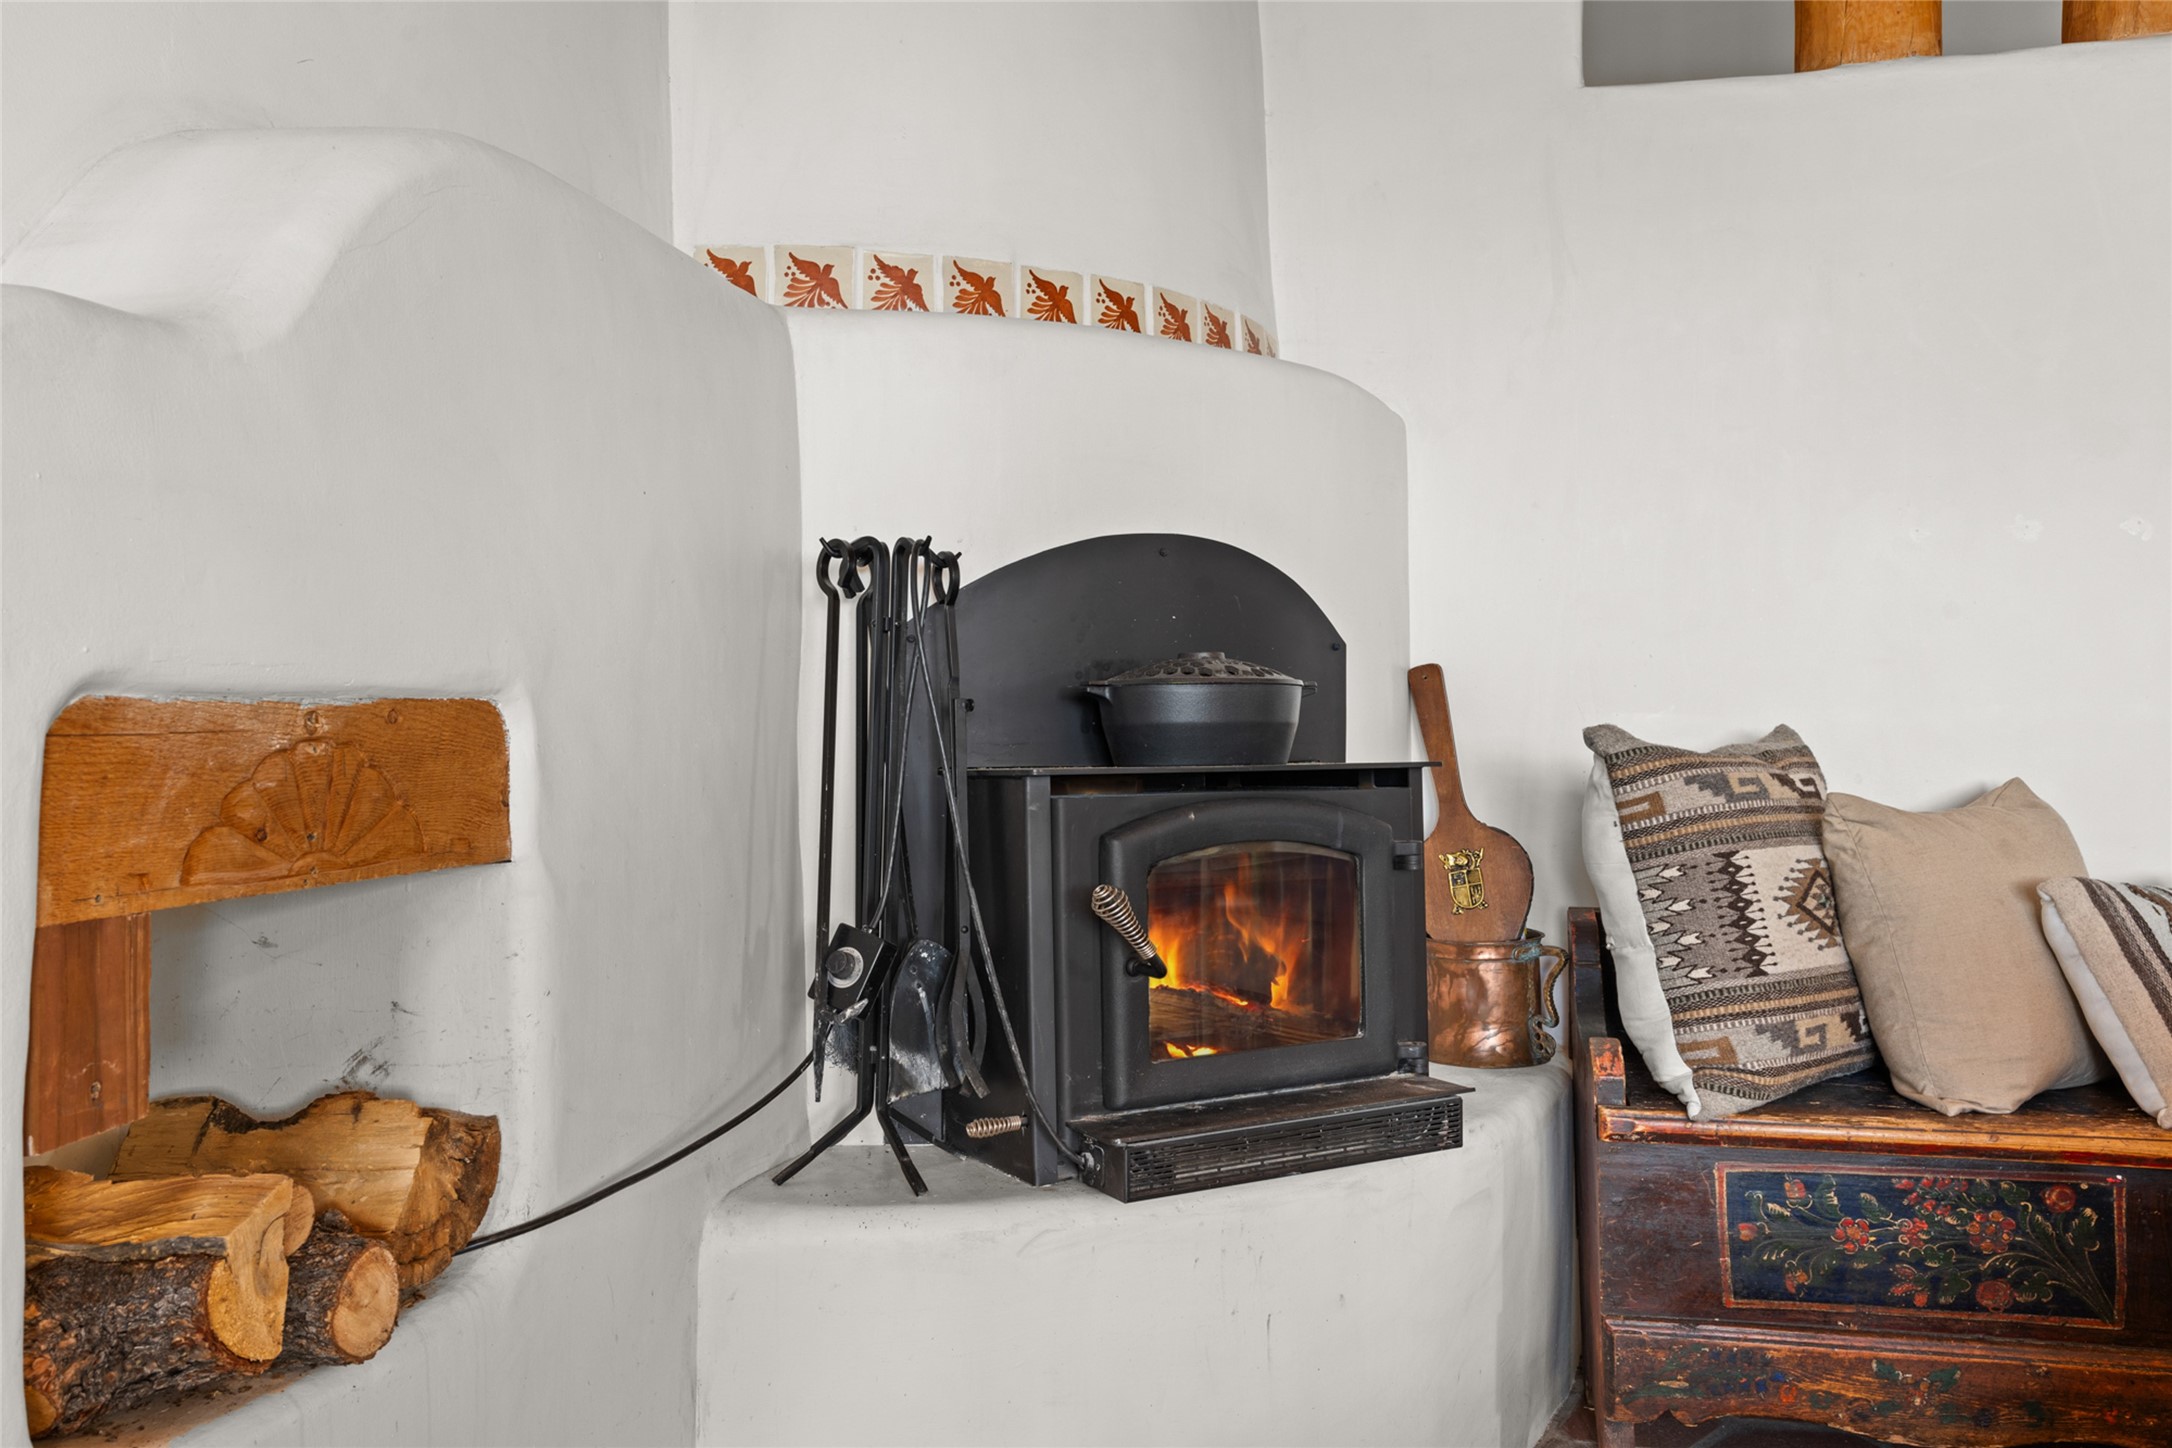 Kiva fireplace with insert